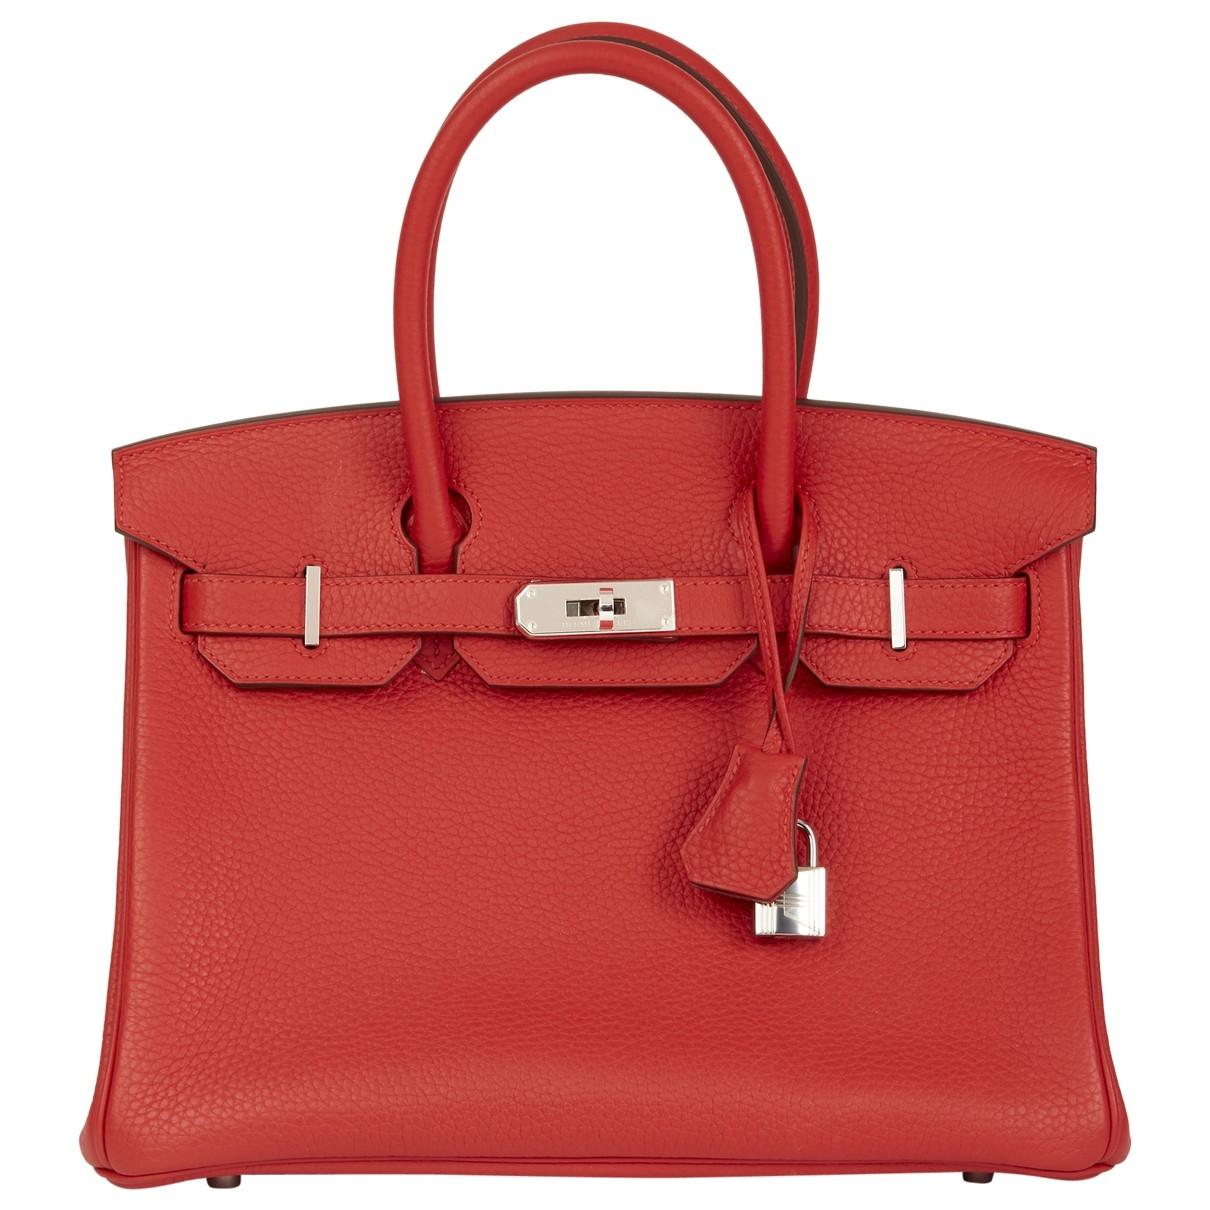 Red Hermes Birkin Handbag | semashow.com